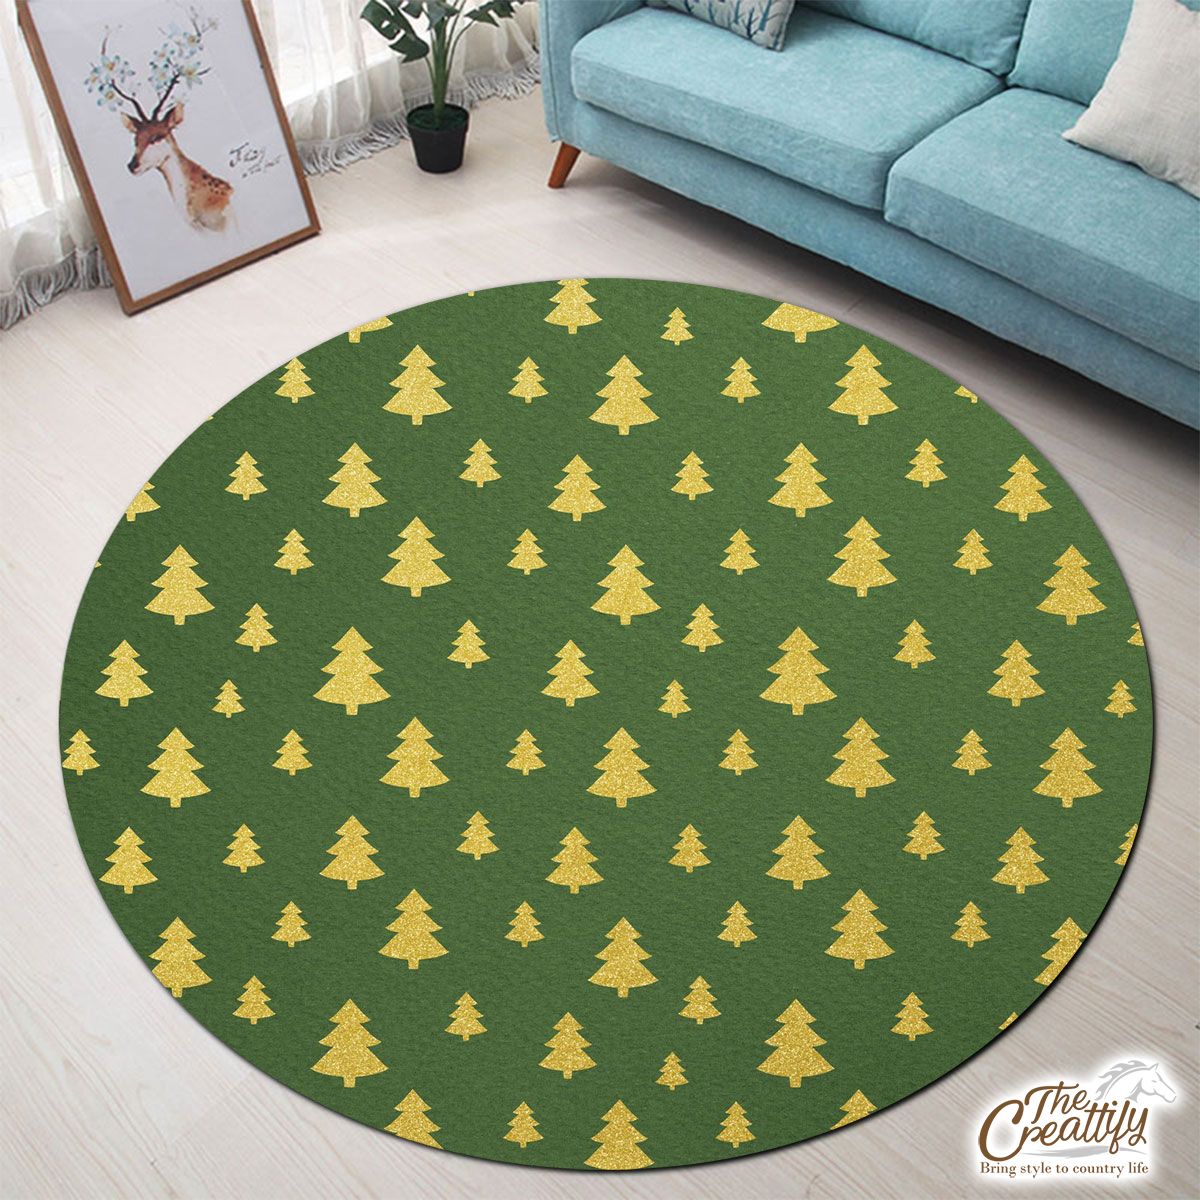 Christmas Tree, Christmas Tree Decorations, Pine Tree Pattern On Green Round Carpet